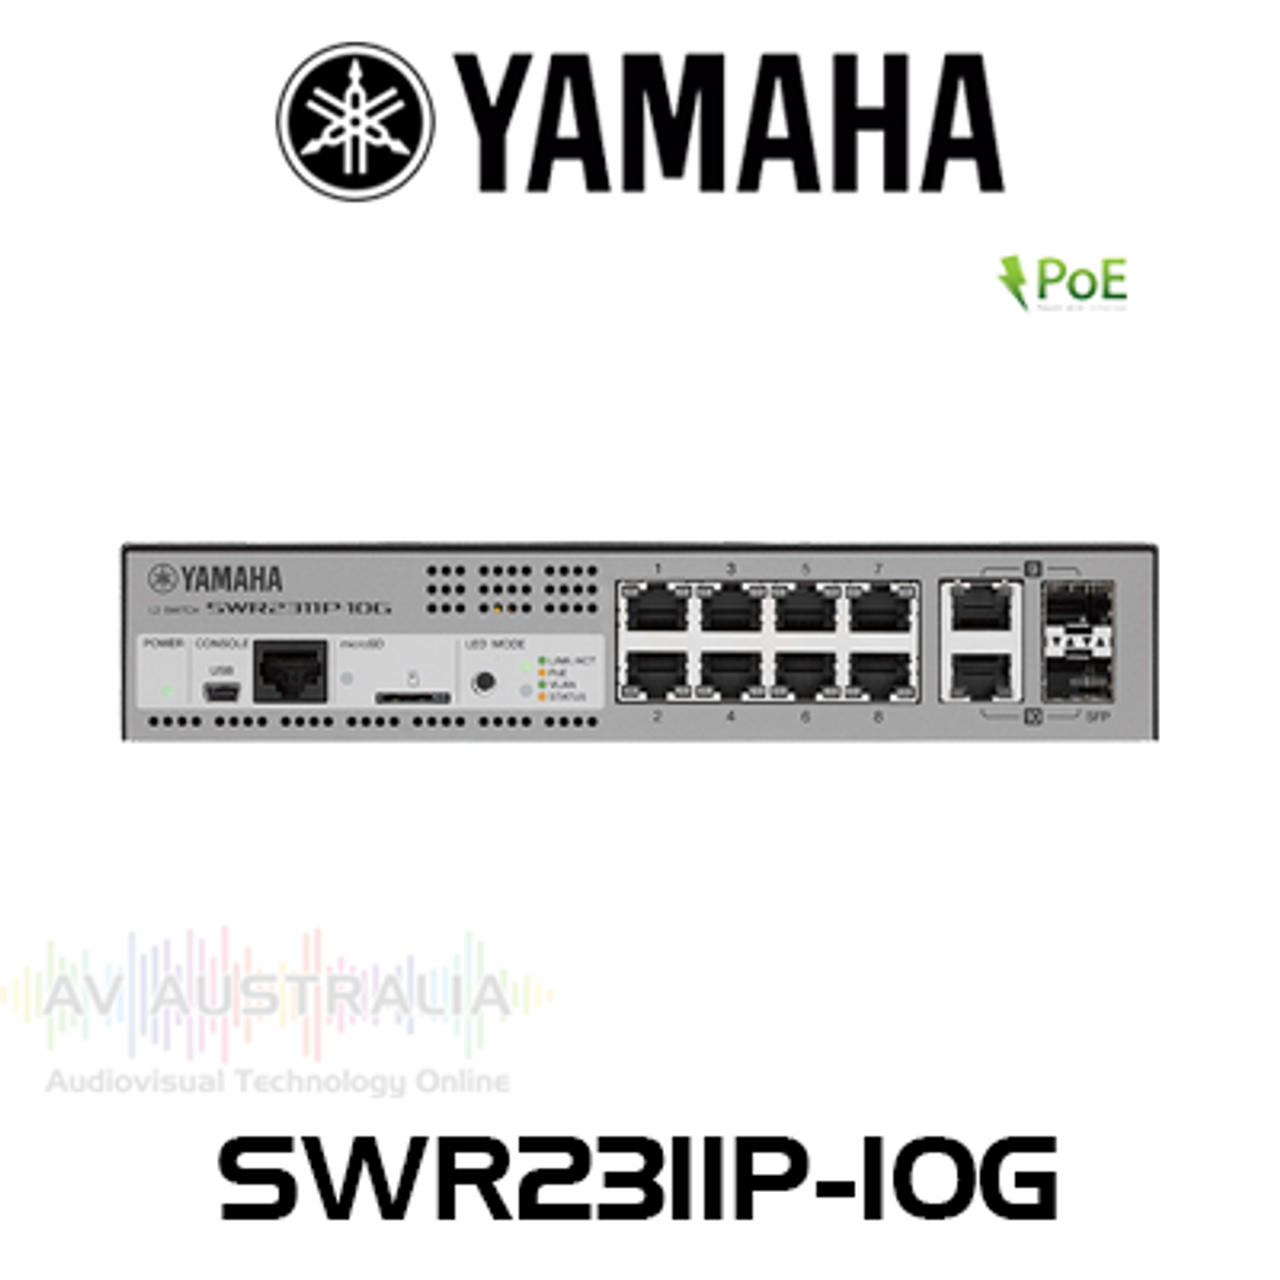 Yamaha SWR2311P-10G 8-Port PoE L2 Network Switch with 2 LAN/SFP